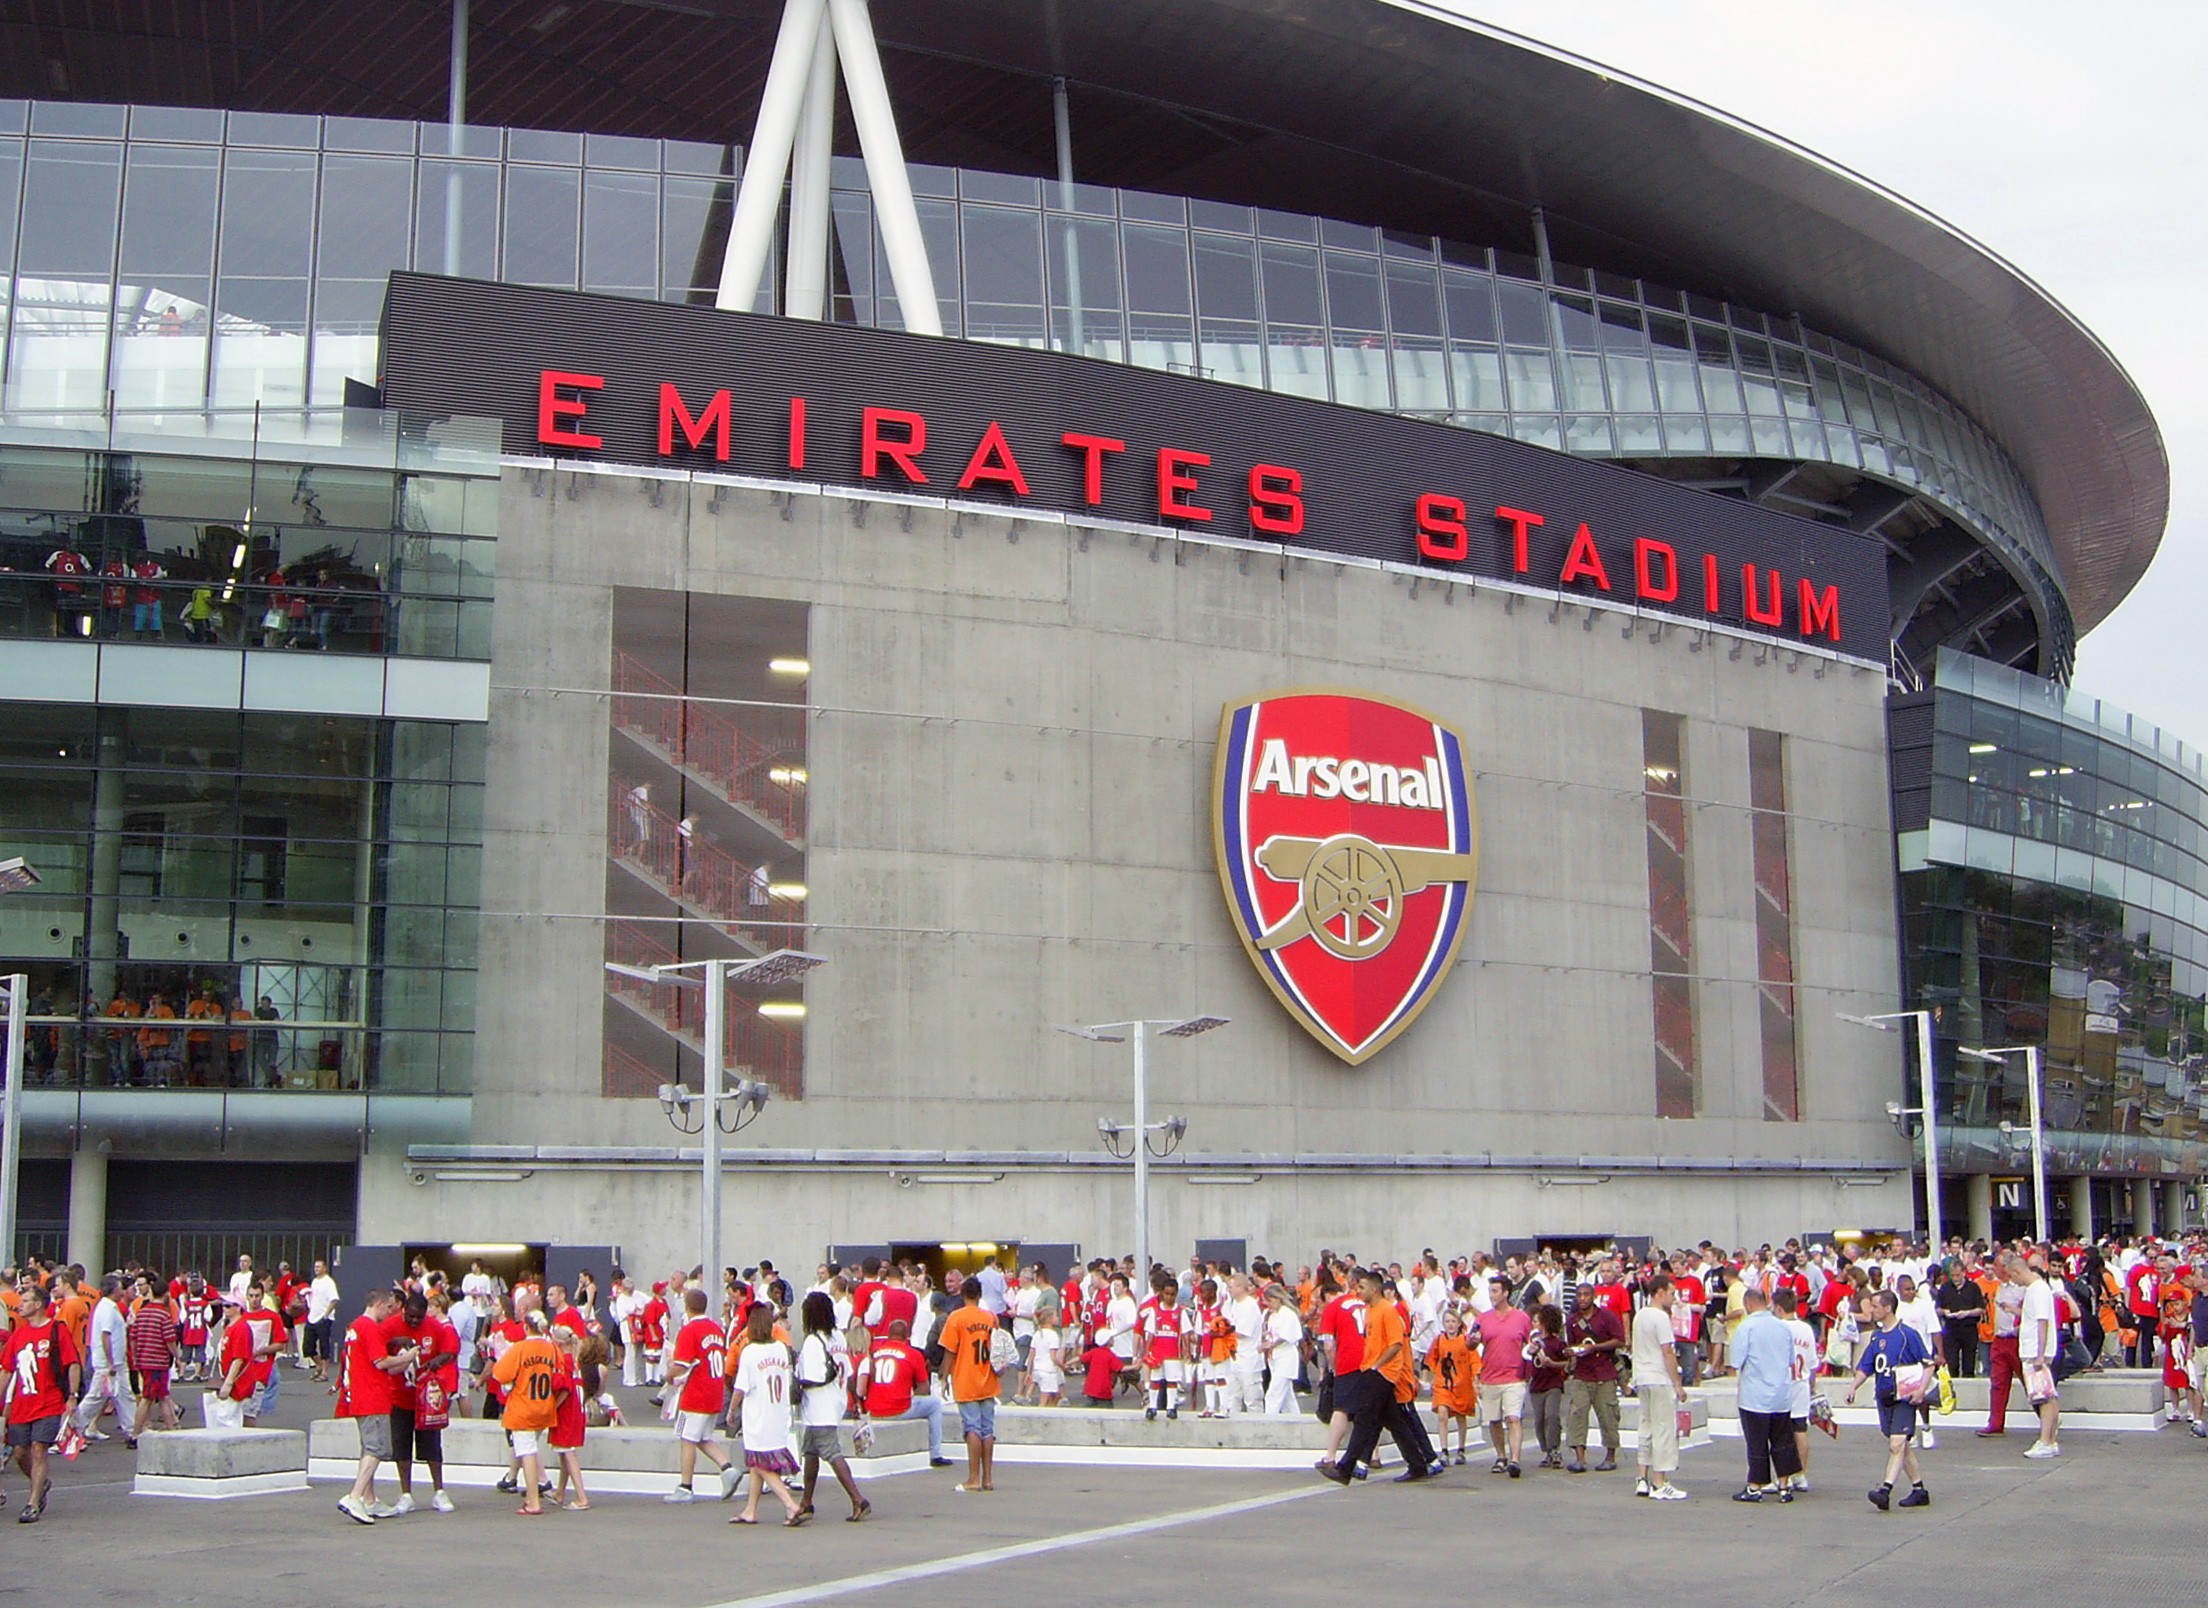 How Arsenal’s stadium tour can teach SaaS companies to close deals